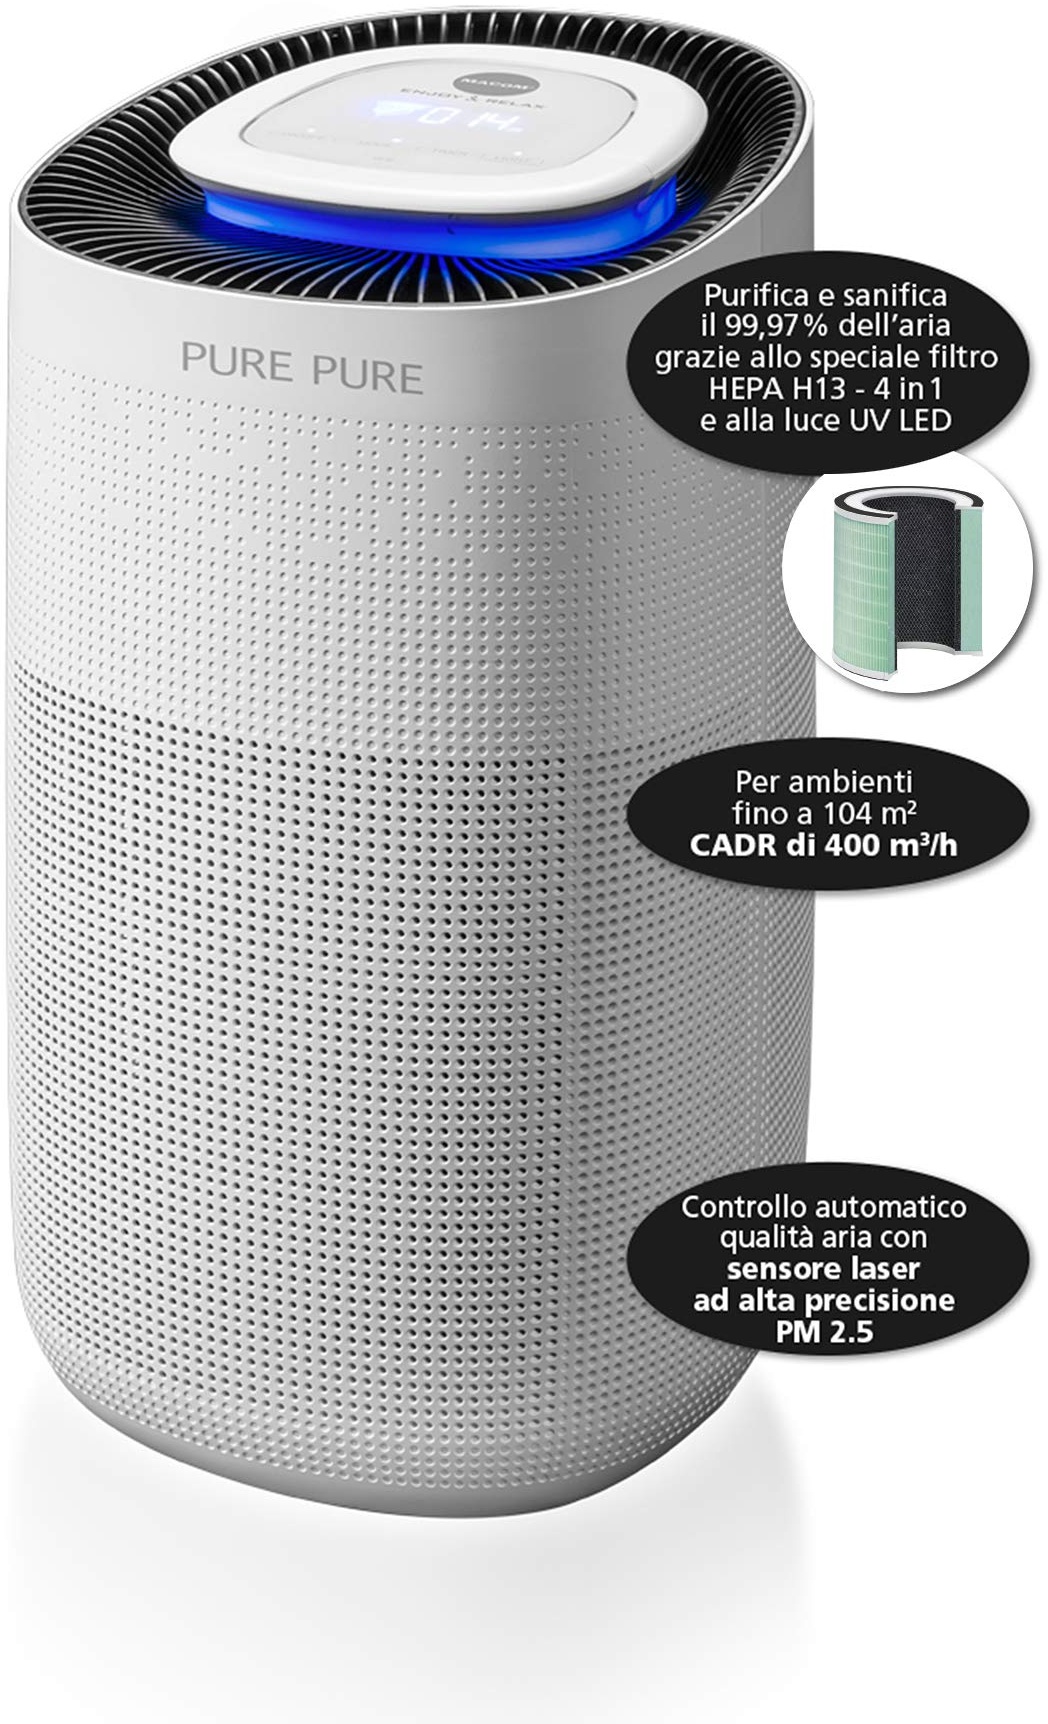 Macom Enjoy & Relax 879 Pure Pure Pure Luftreiniger mit eigener App Funktion Wi-Fi Air Purifier, 1 Stück